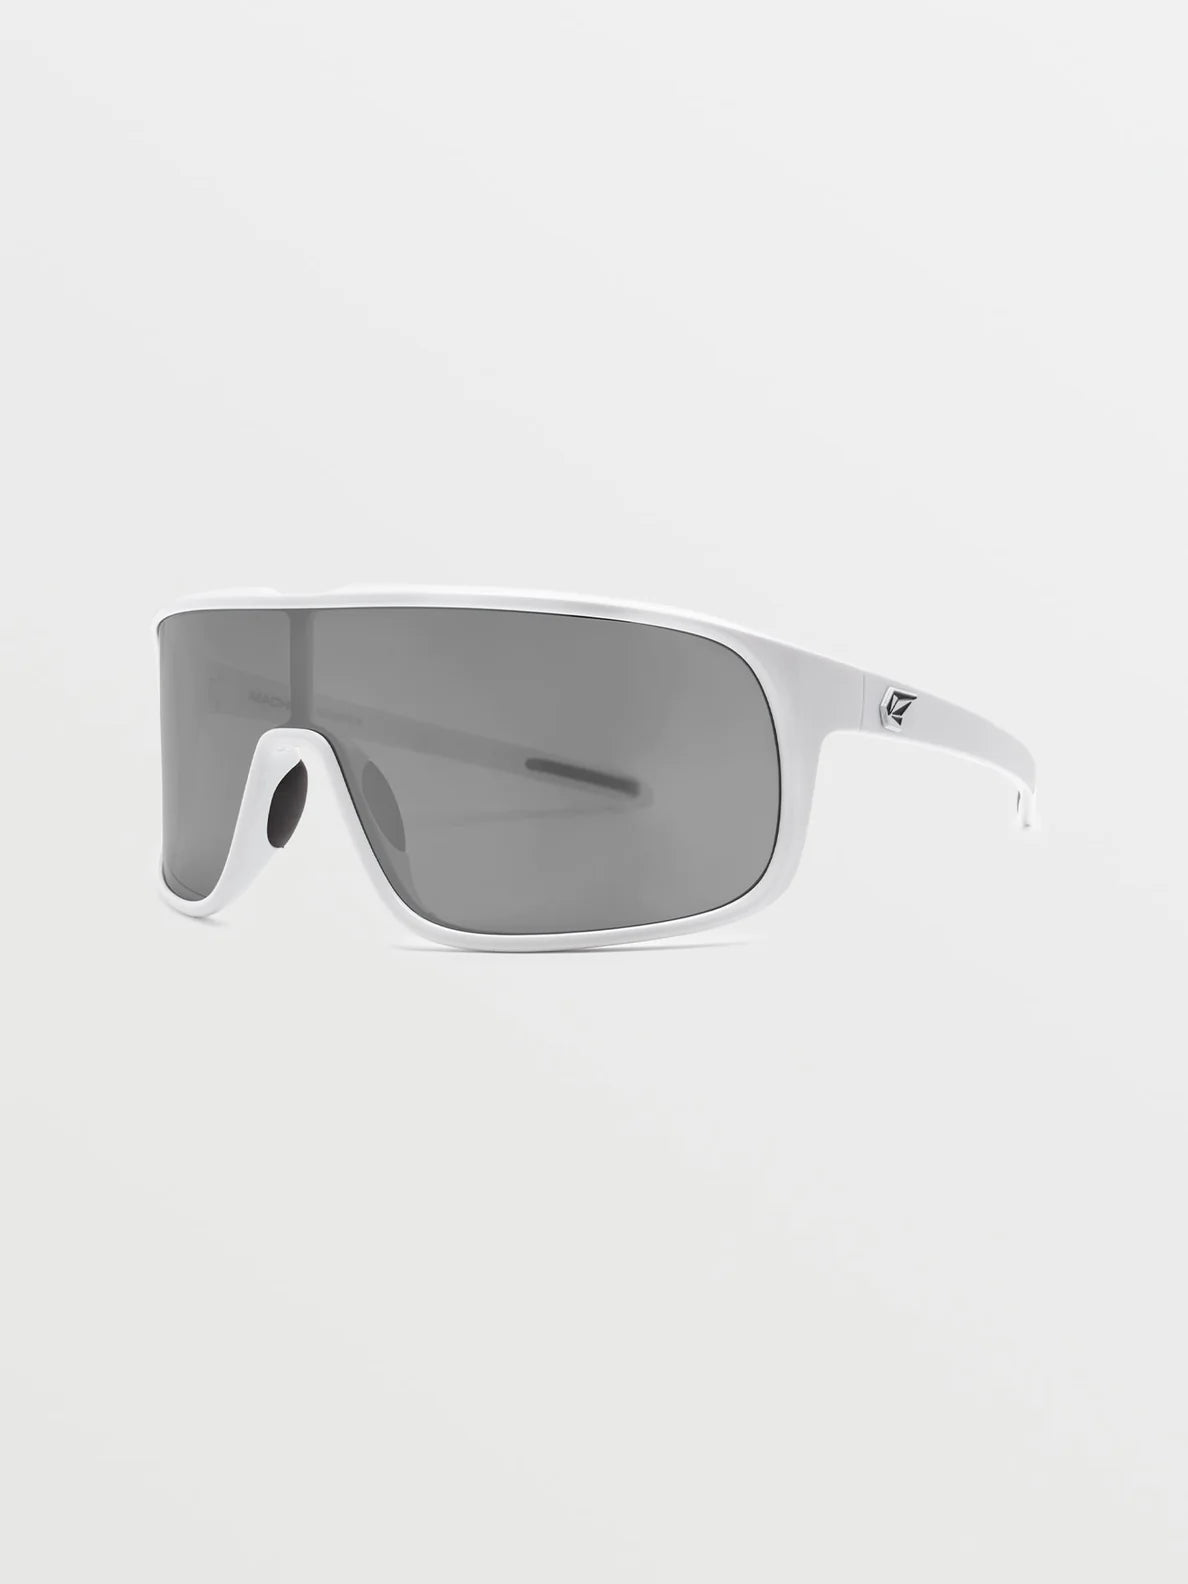 Volcom Macho Sunglasses - AST Colors Sunglasses Gloss white silver mirror